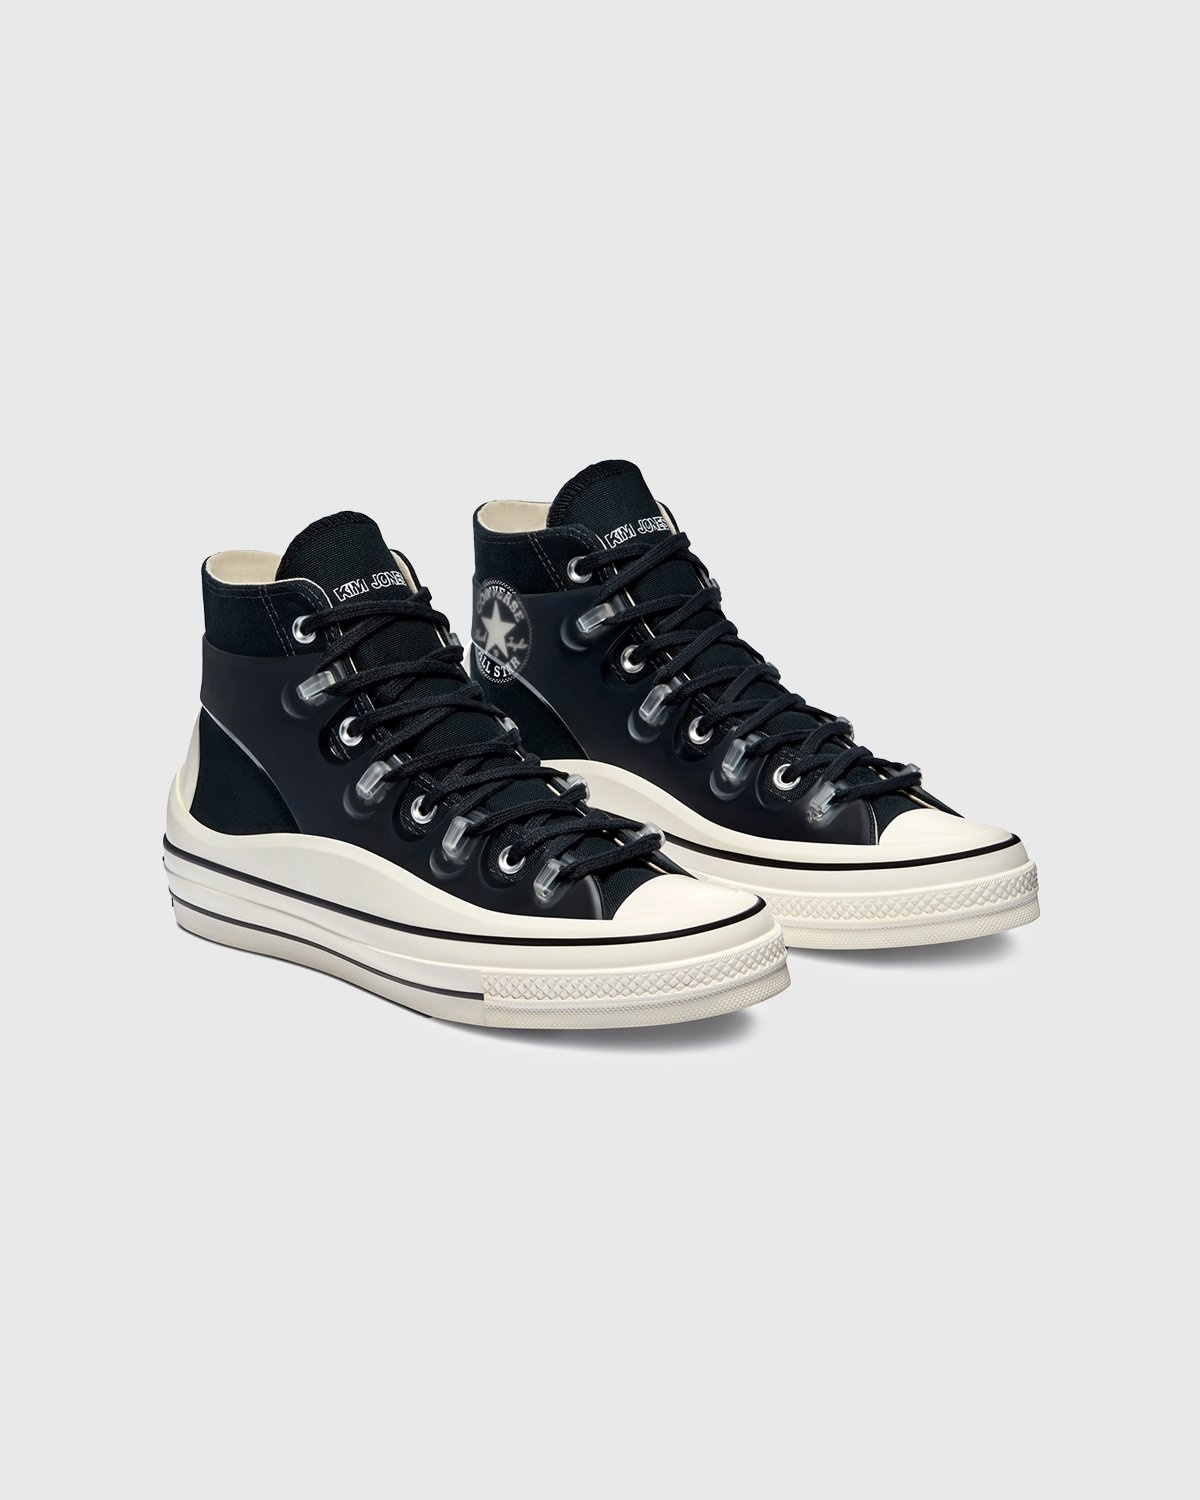 Converse x Kim Jones – Chuck 70 Utility Wave Black/Egret - Sneakers - Black - Image 2